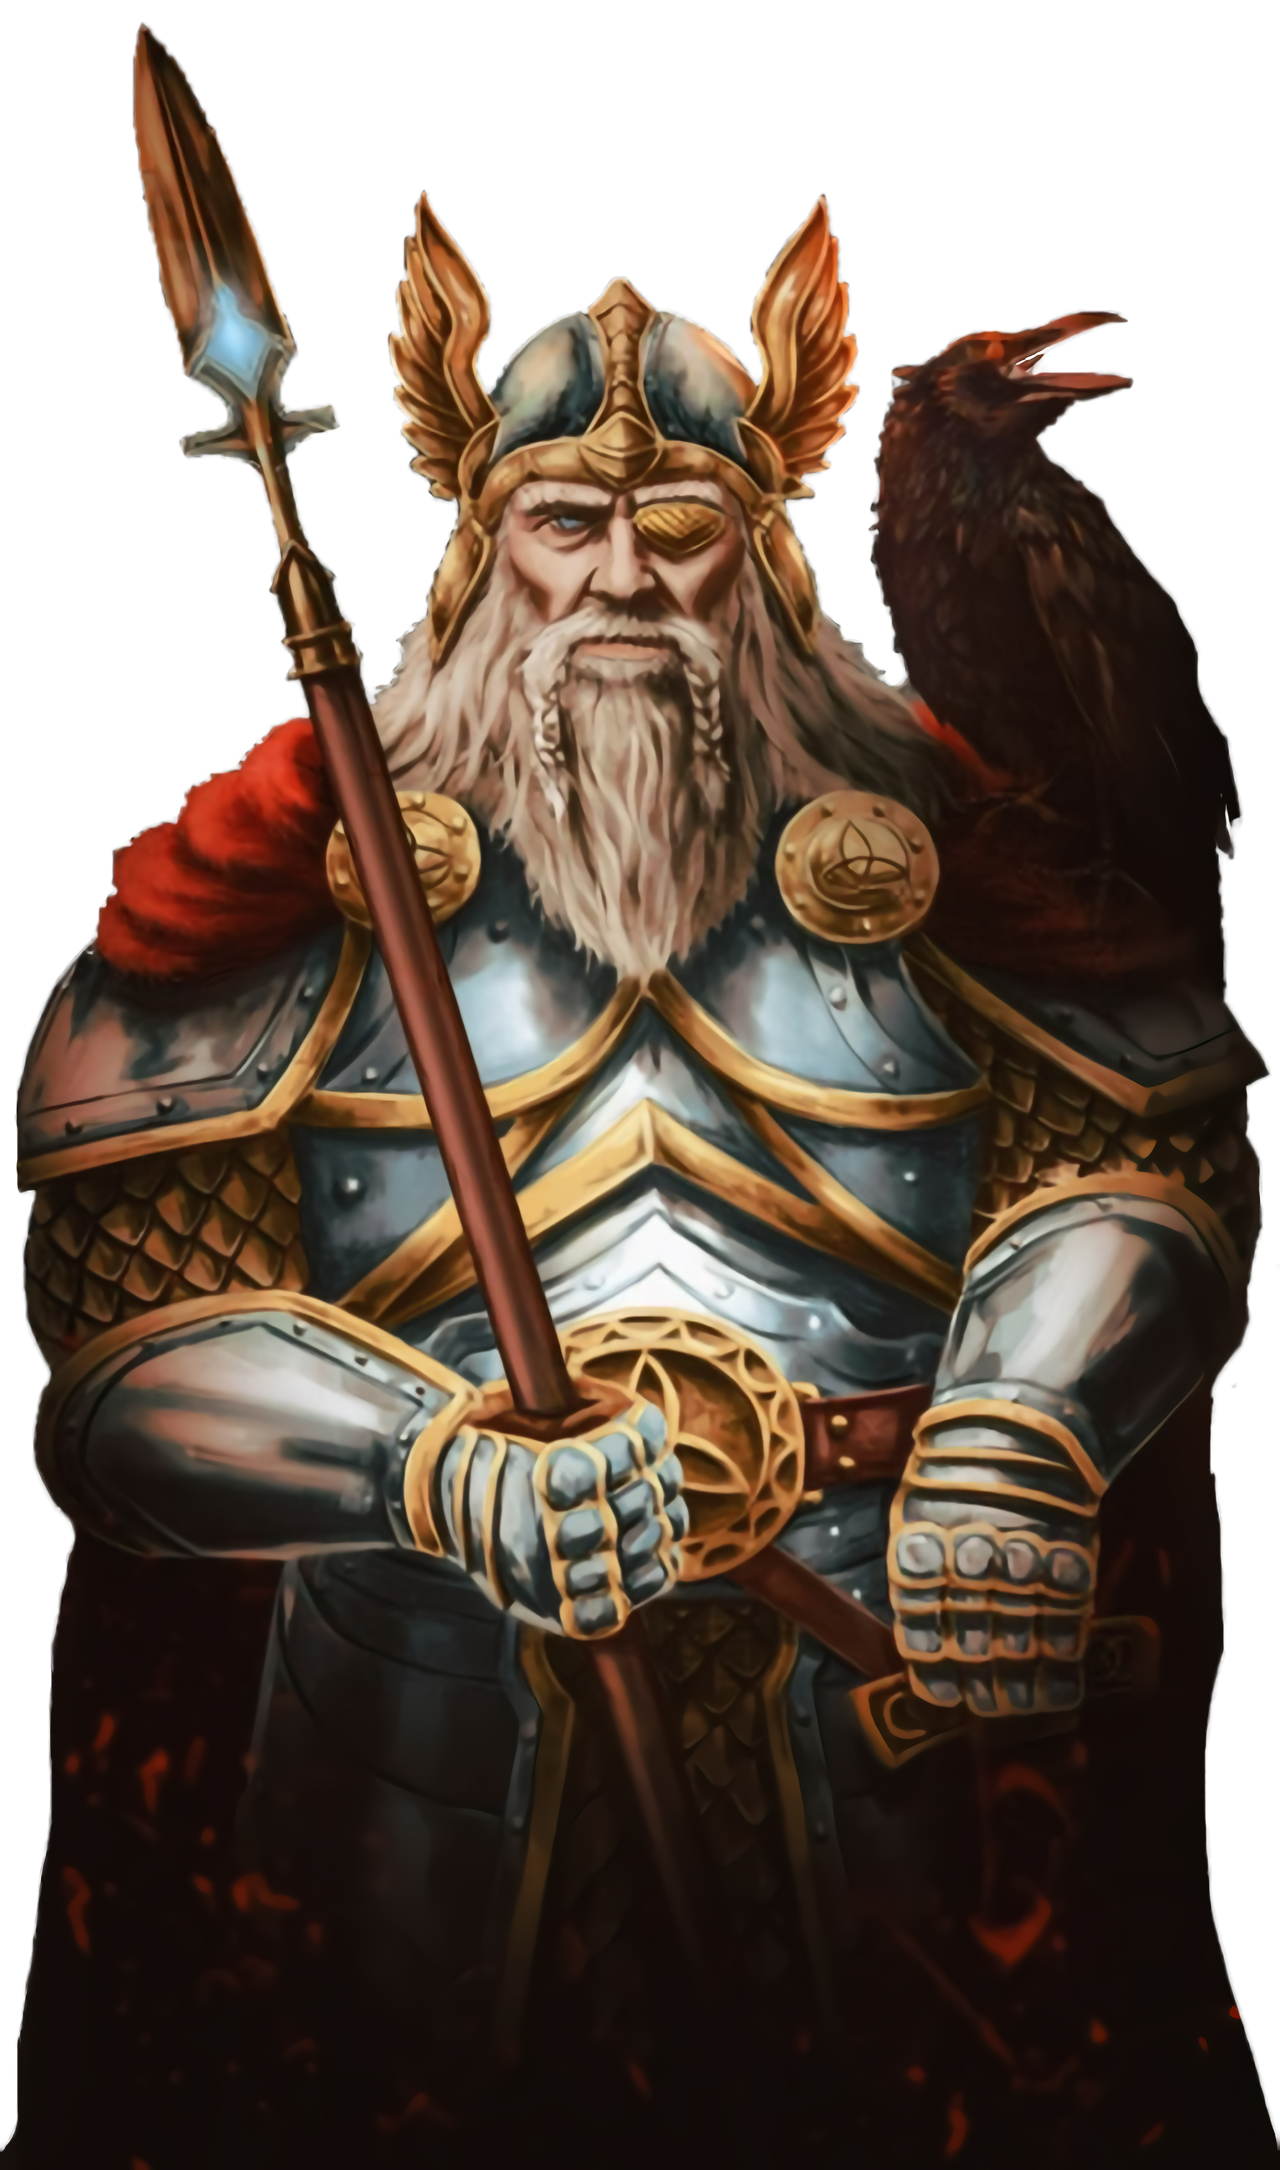 God of War - Odin Family Transparent by DavidBksAndrade on DeviantArt